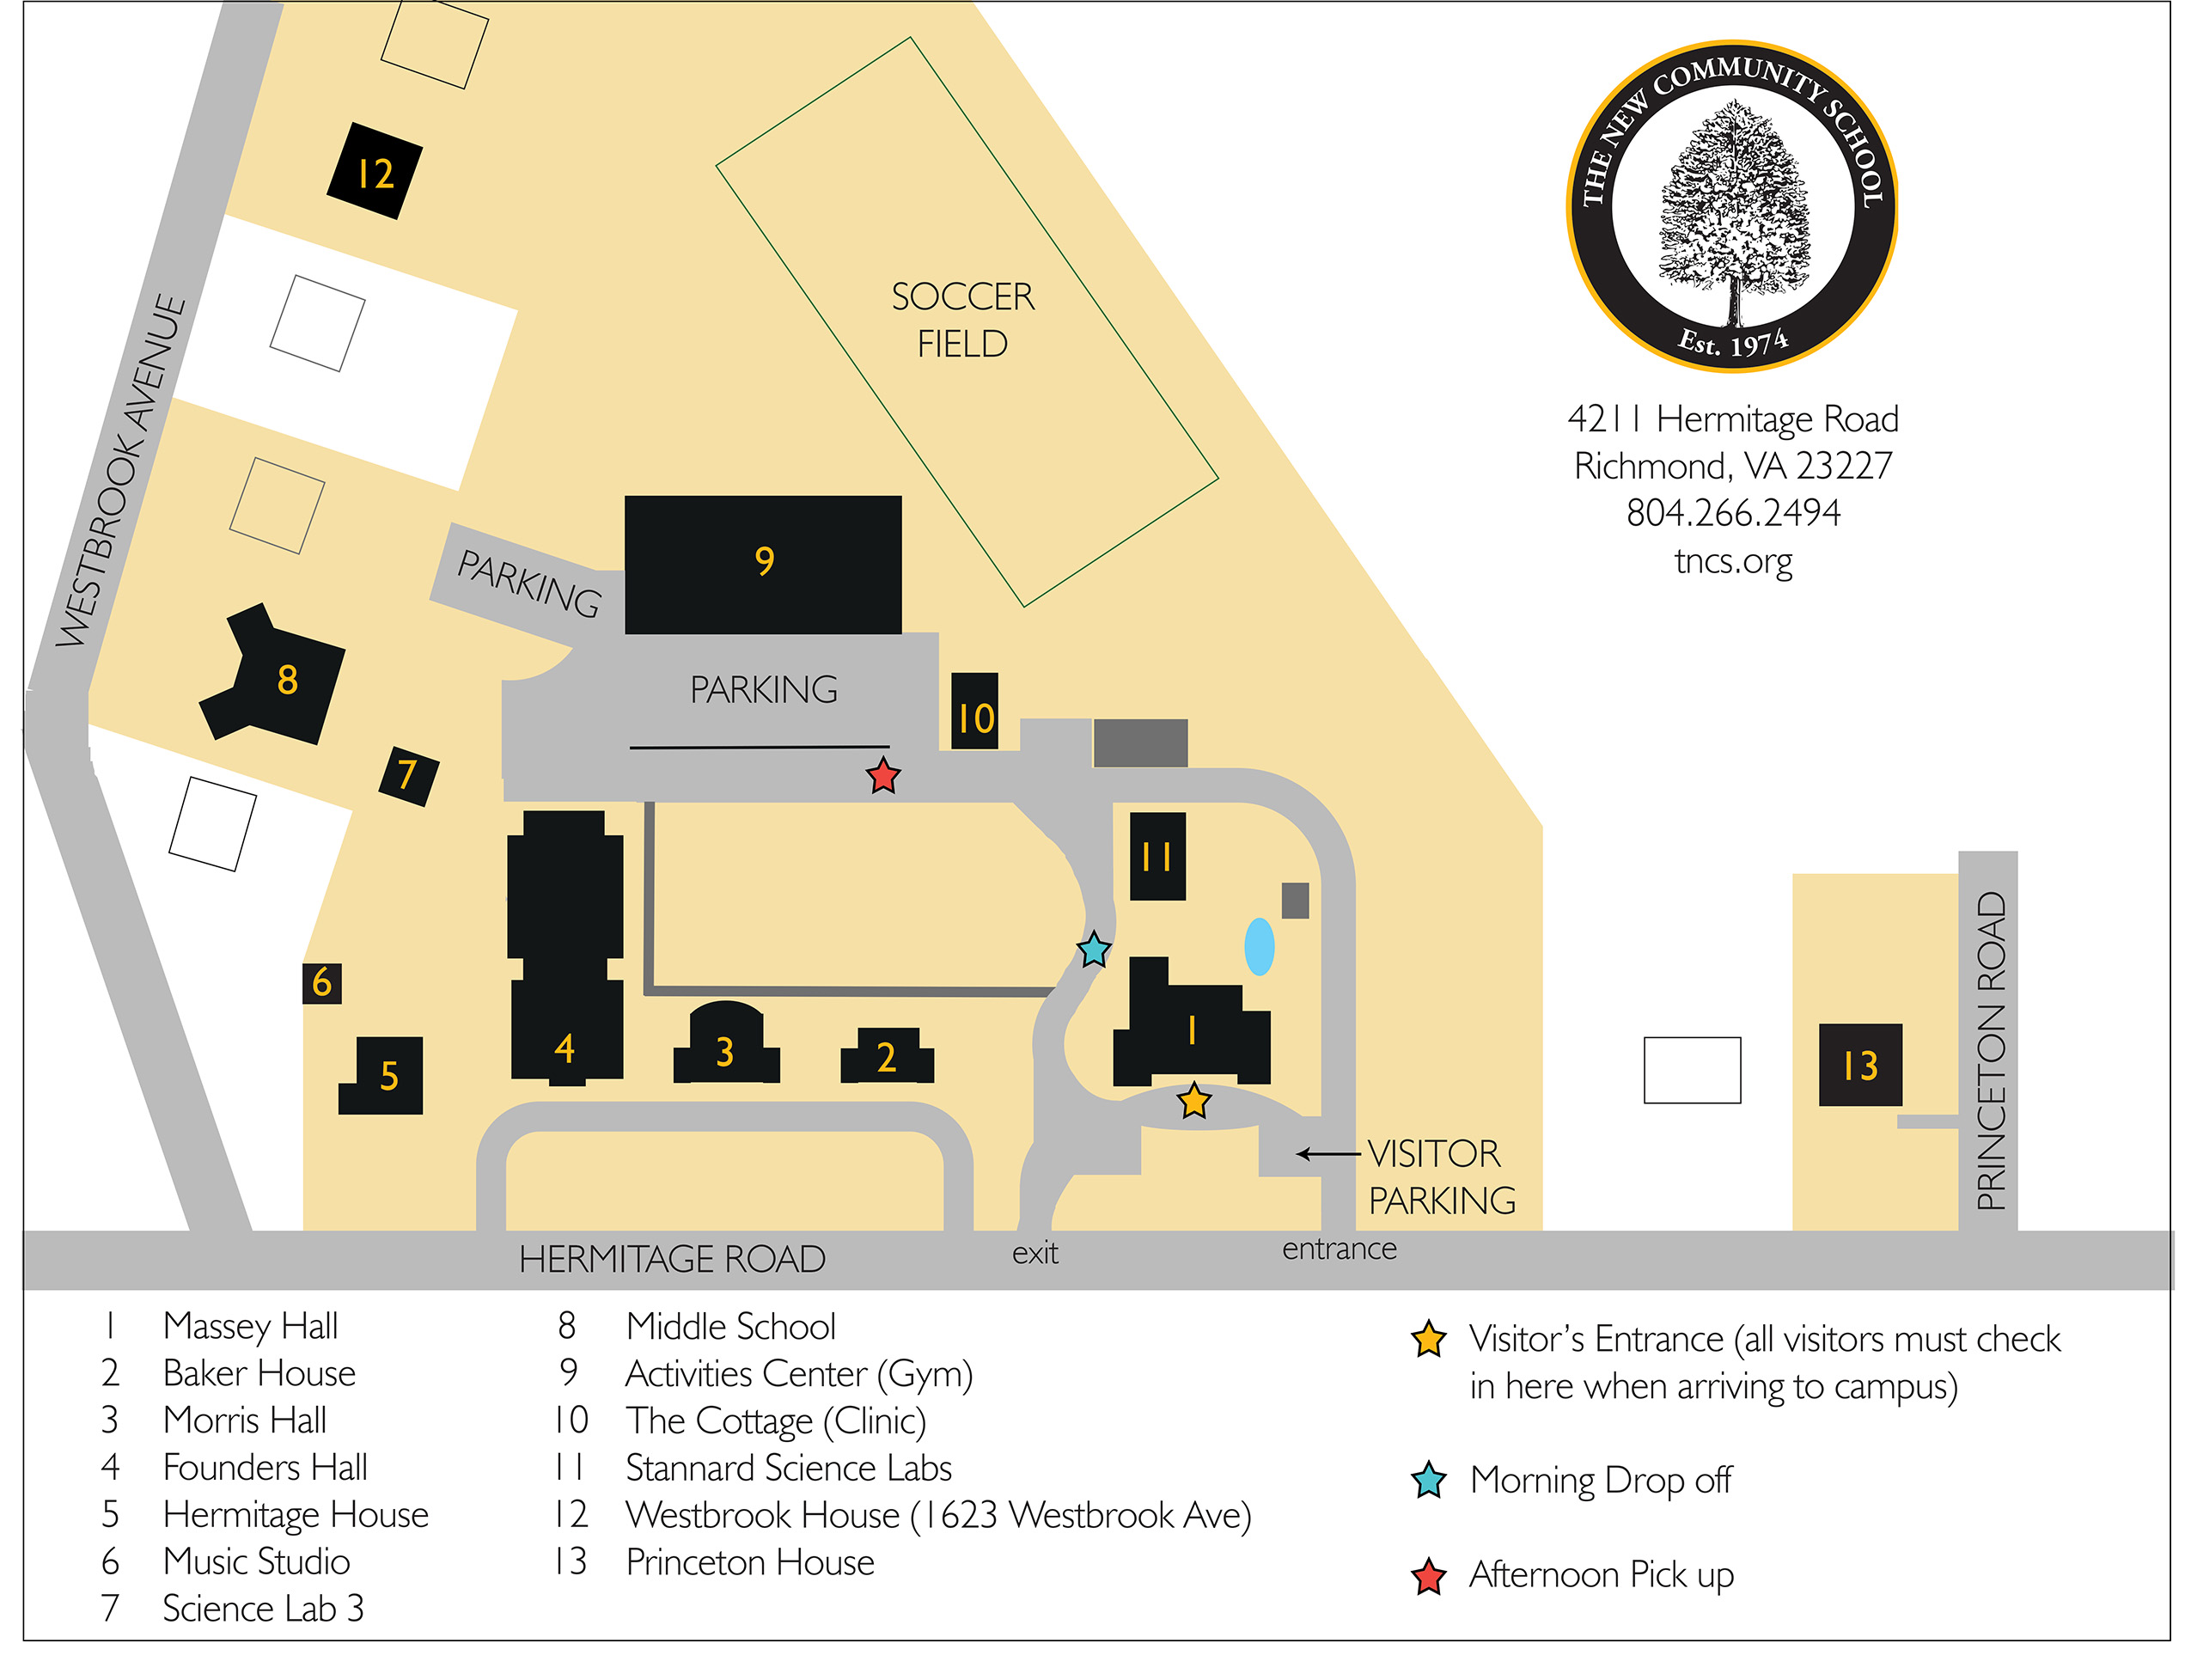 TNCS Campus Map